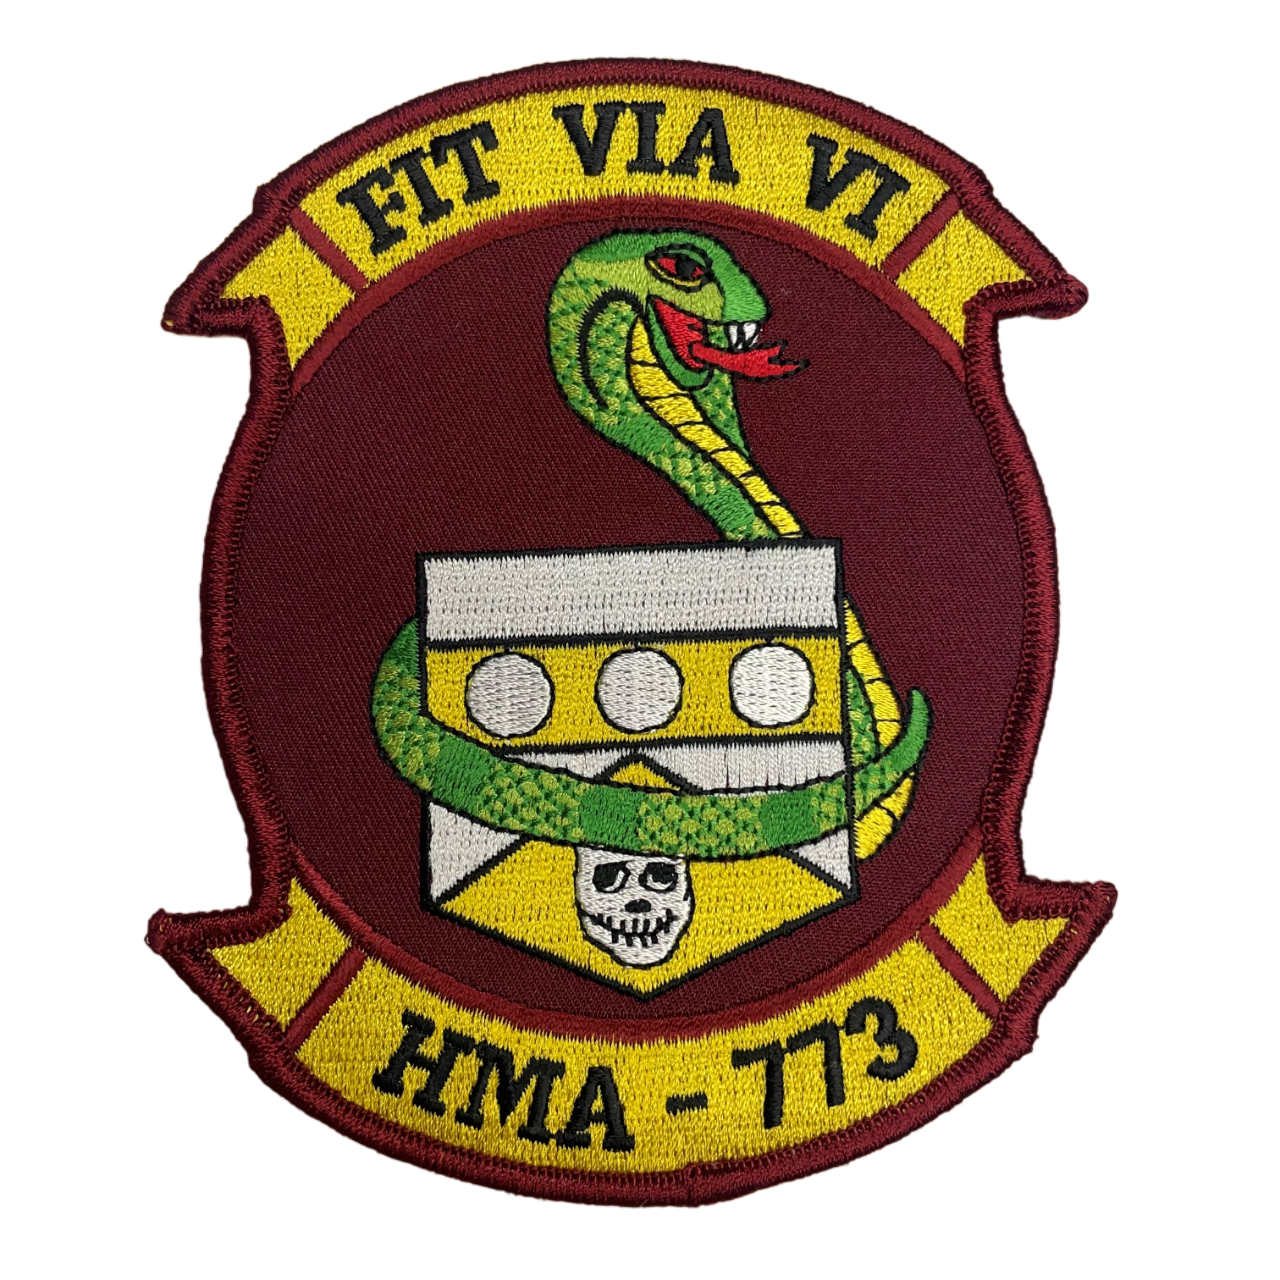 HMA-773 "FIT VIA VI" - Officially Licensed USMC Patch